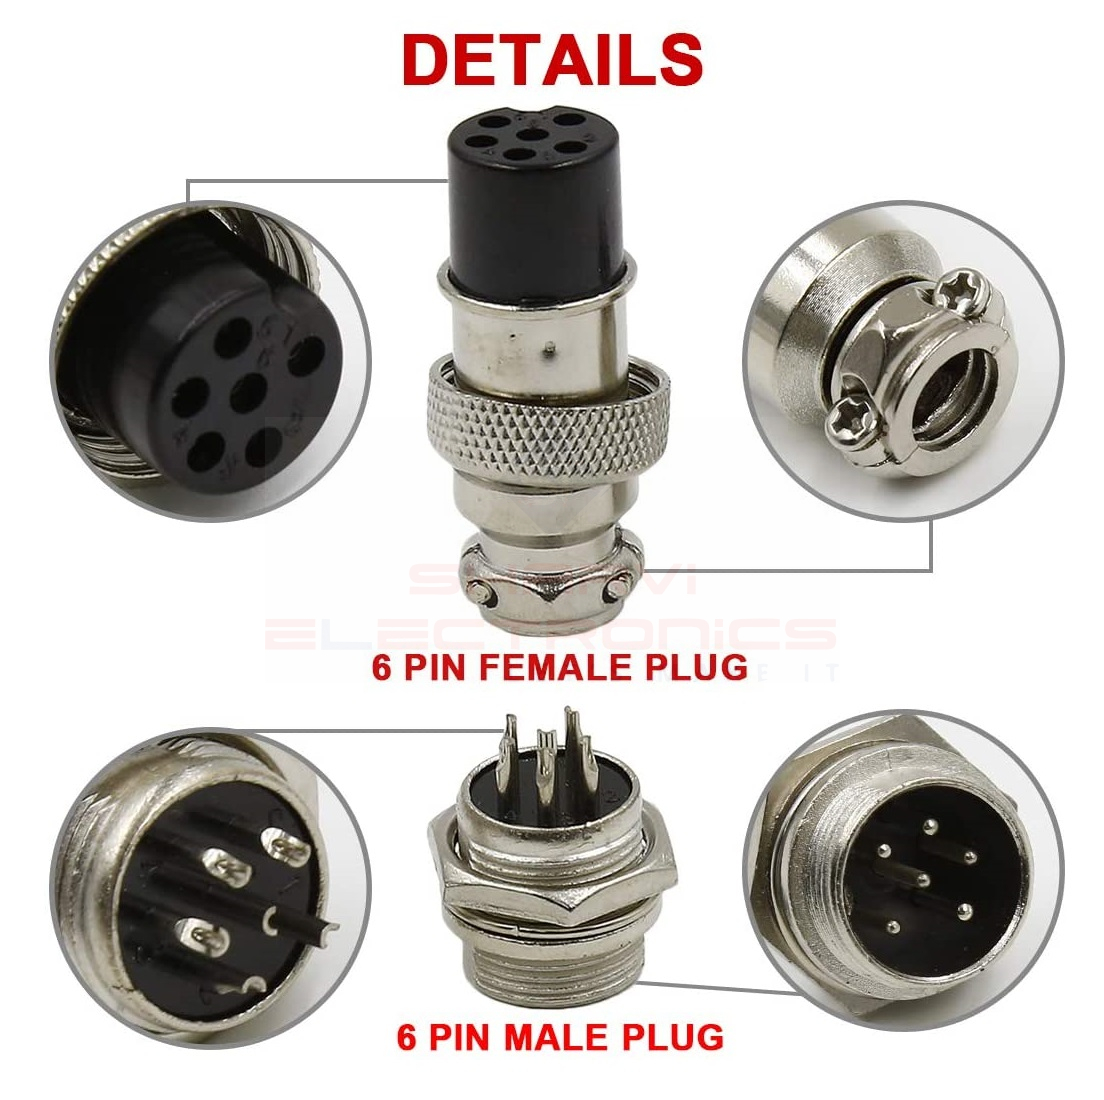 AVIATION PLUG (6 Pin Male And Female) sharvielectronics.com